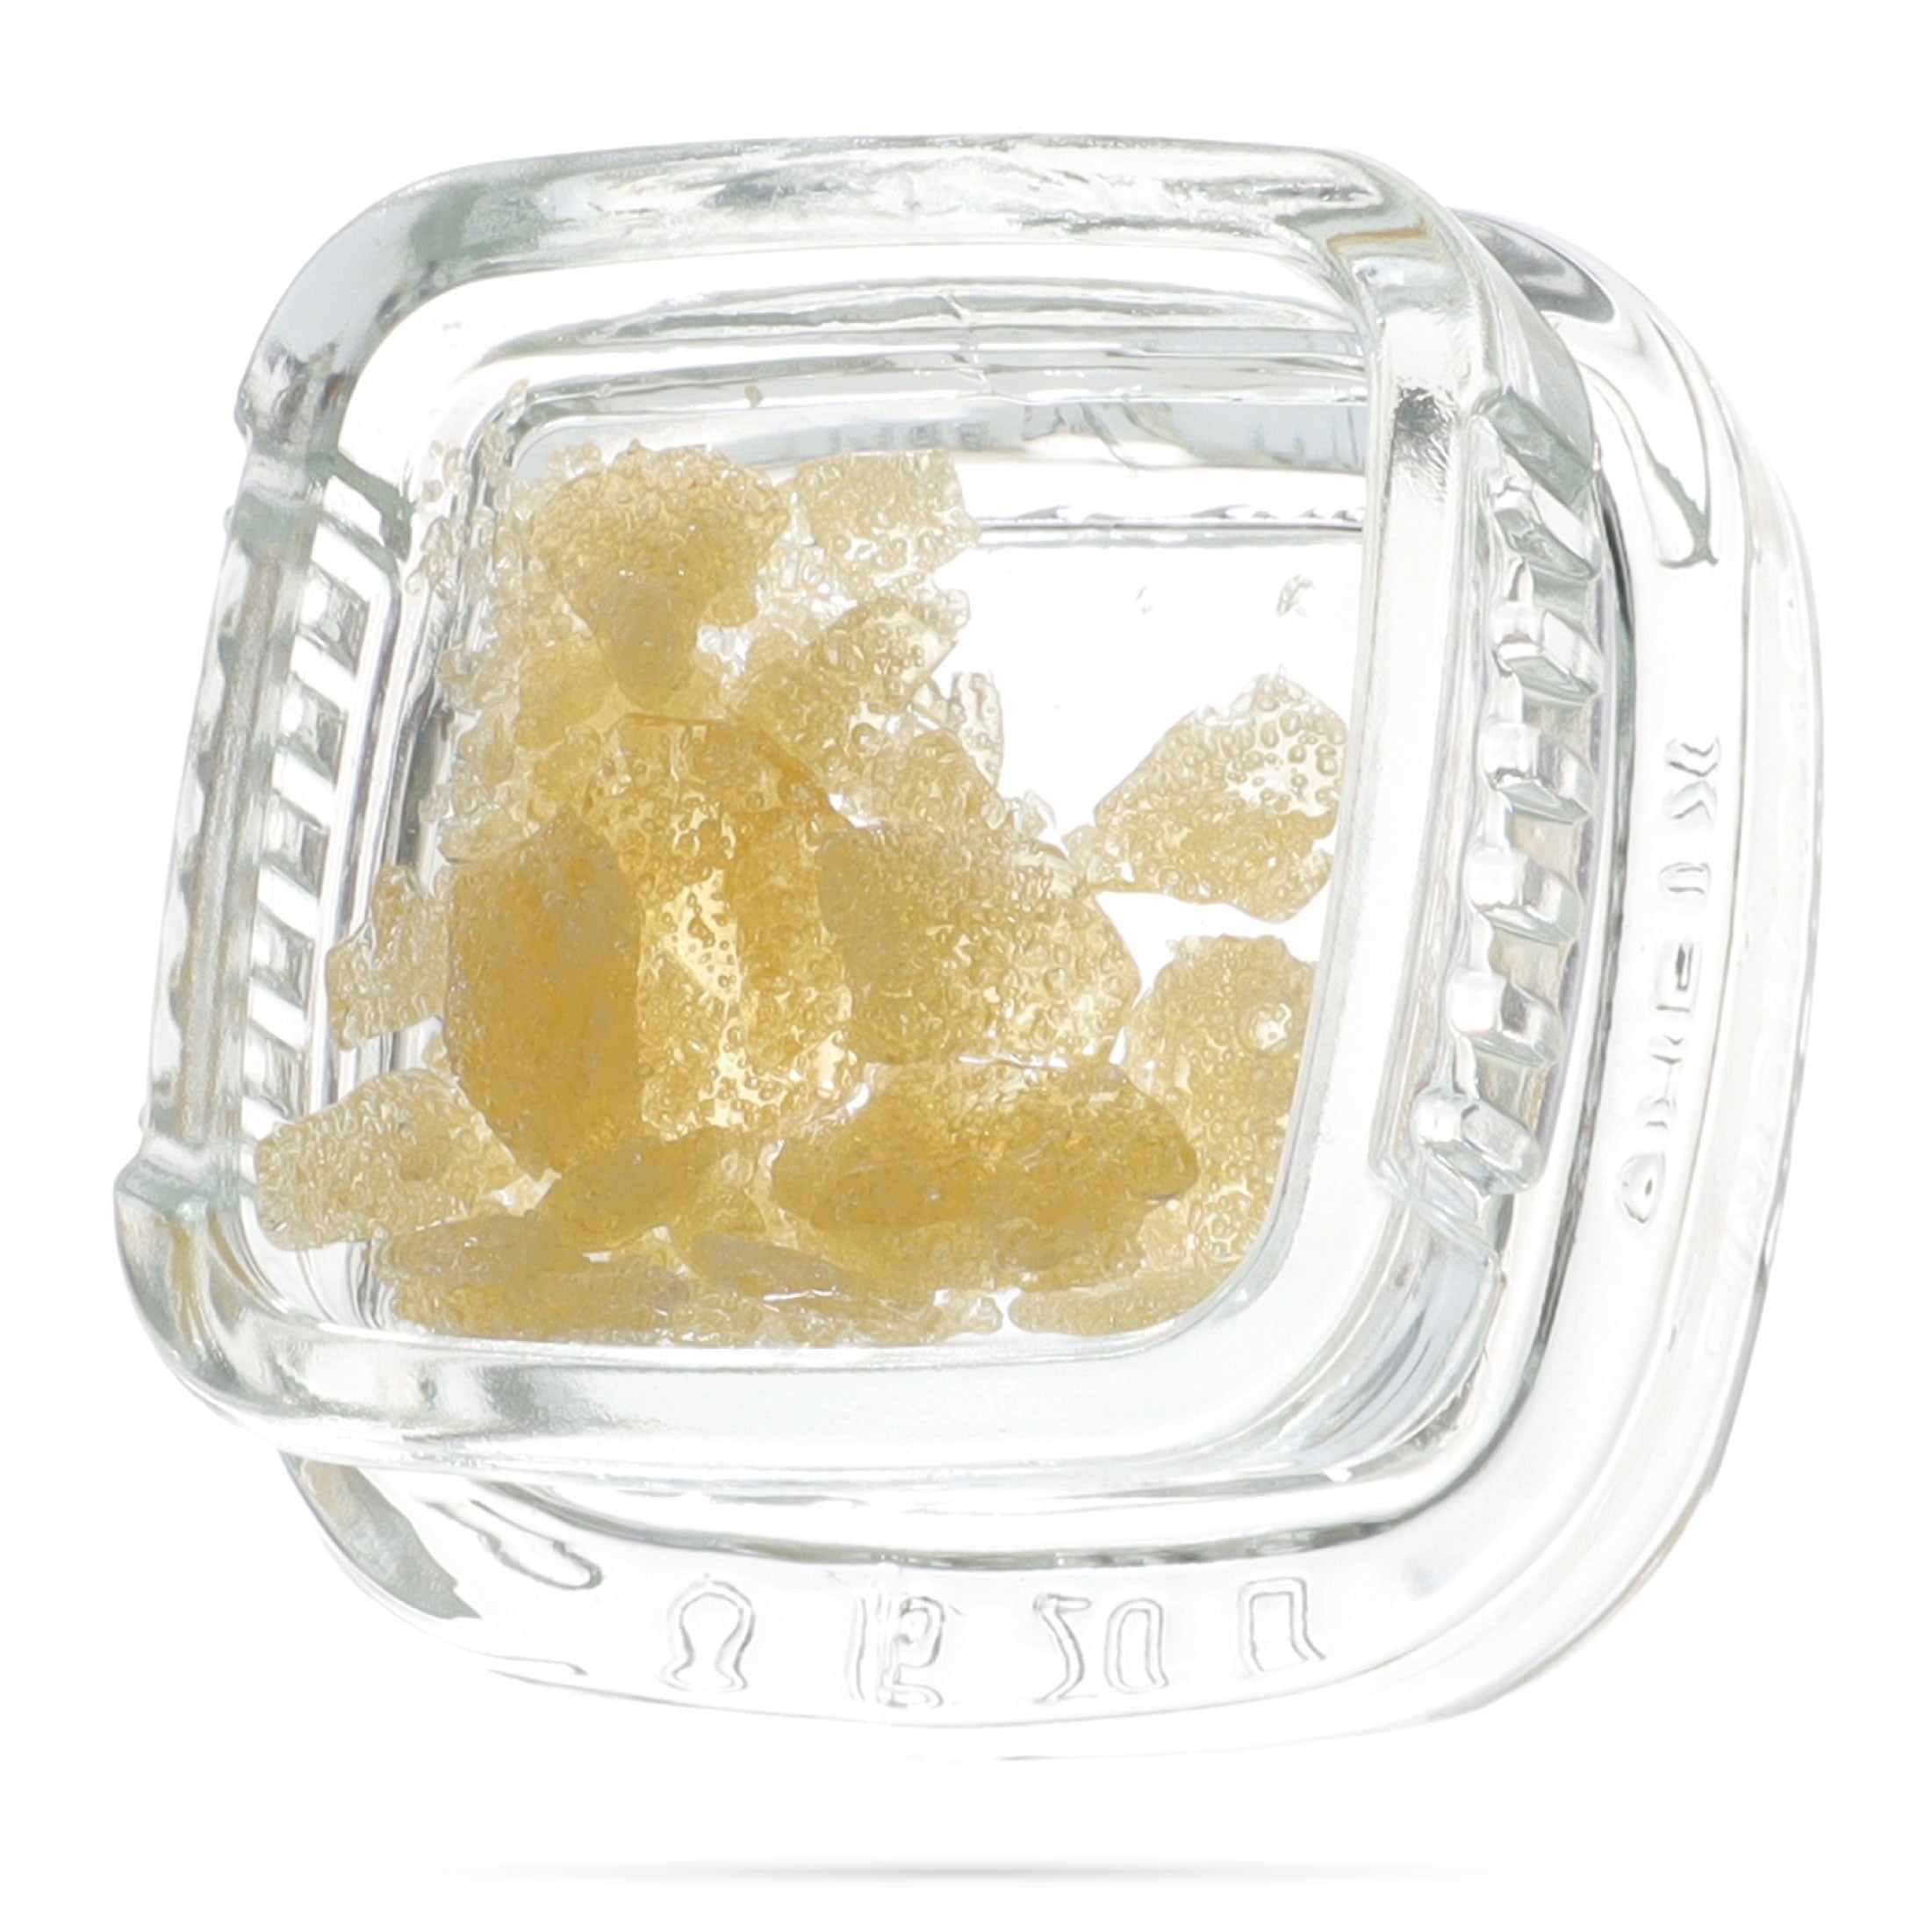 Image of a Calyx jar containing 1 gram of HCFSE CBD Shatter.